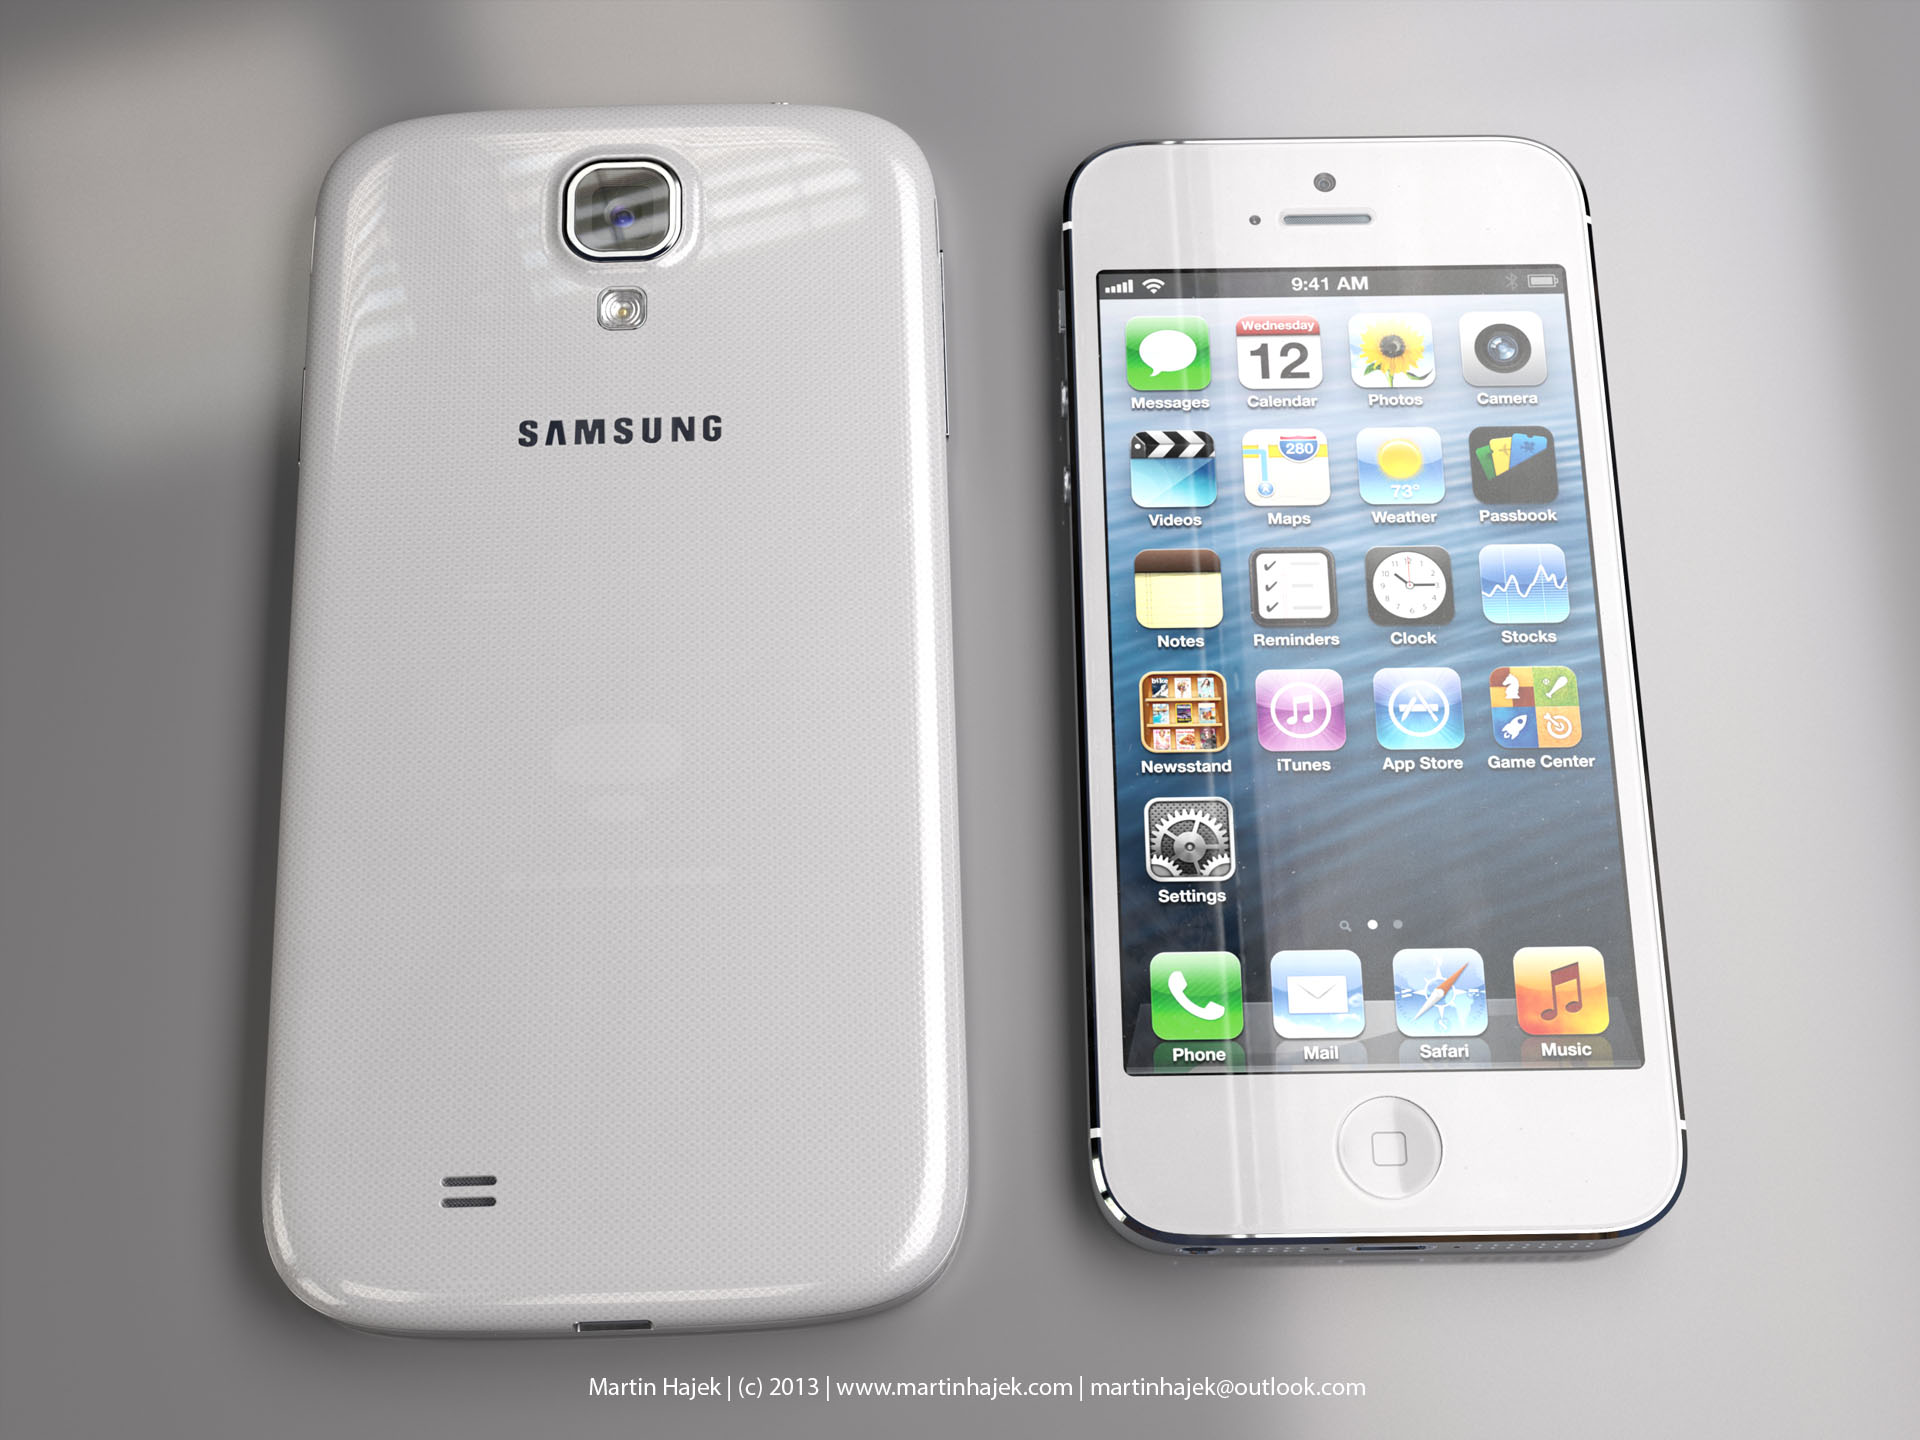 Size comparison (Galaxy S4 vs iPhone 5, Martin Hajek 002)